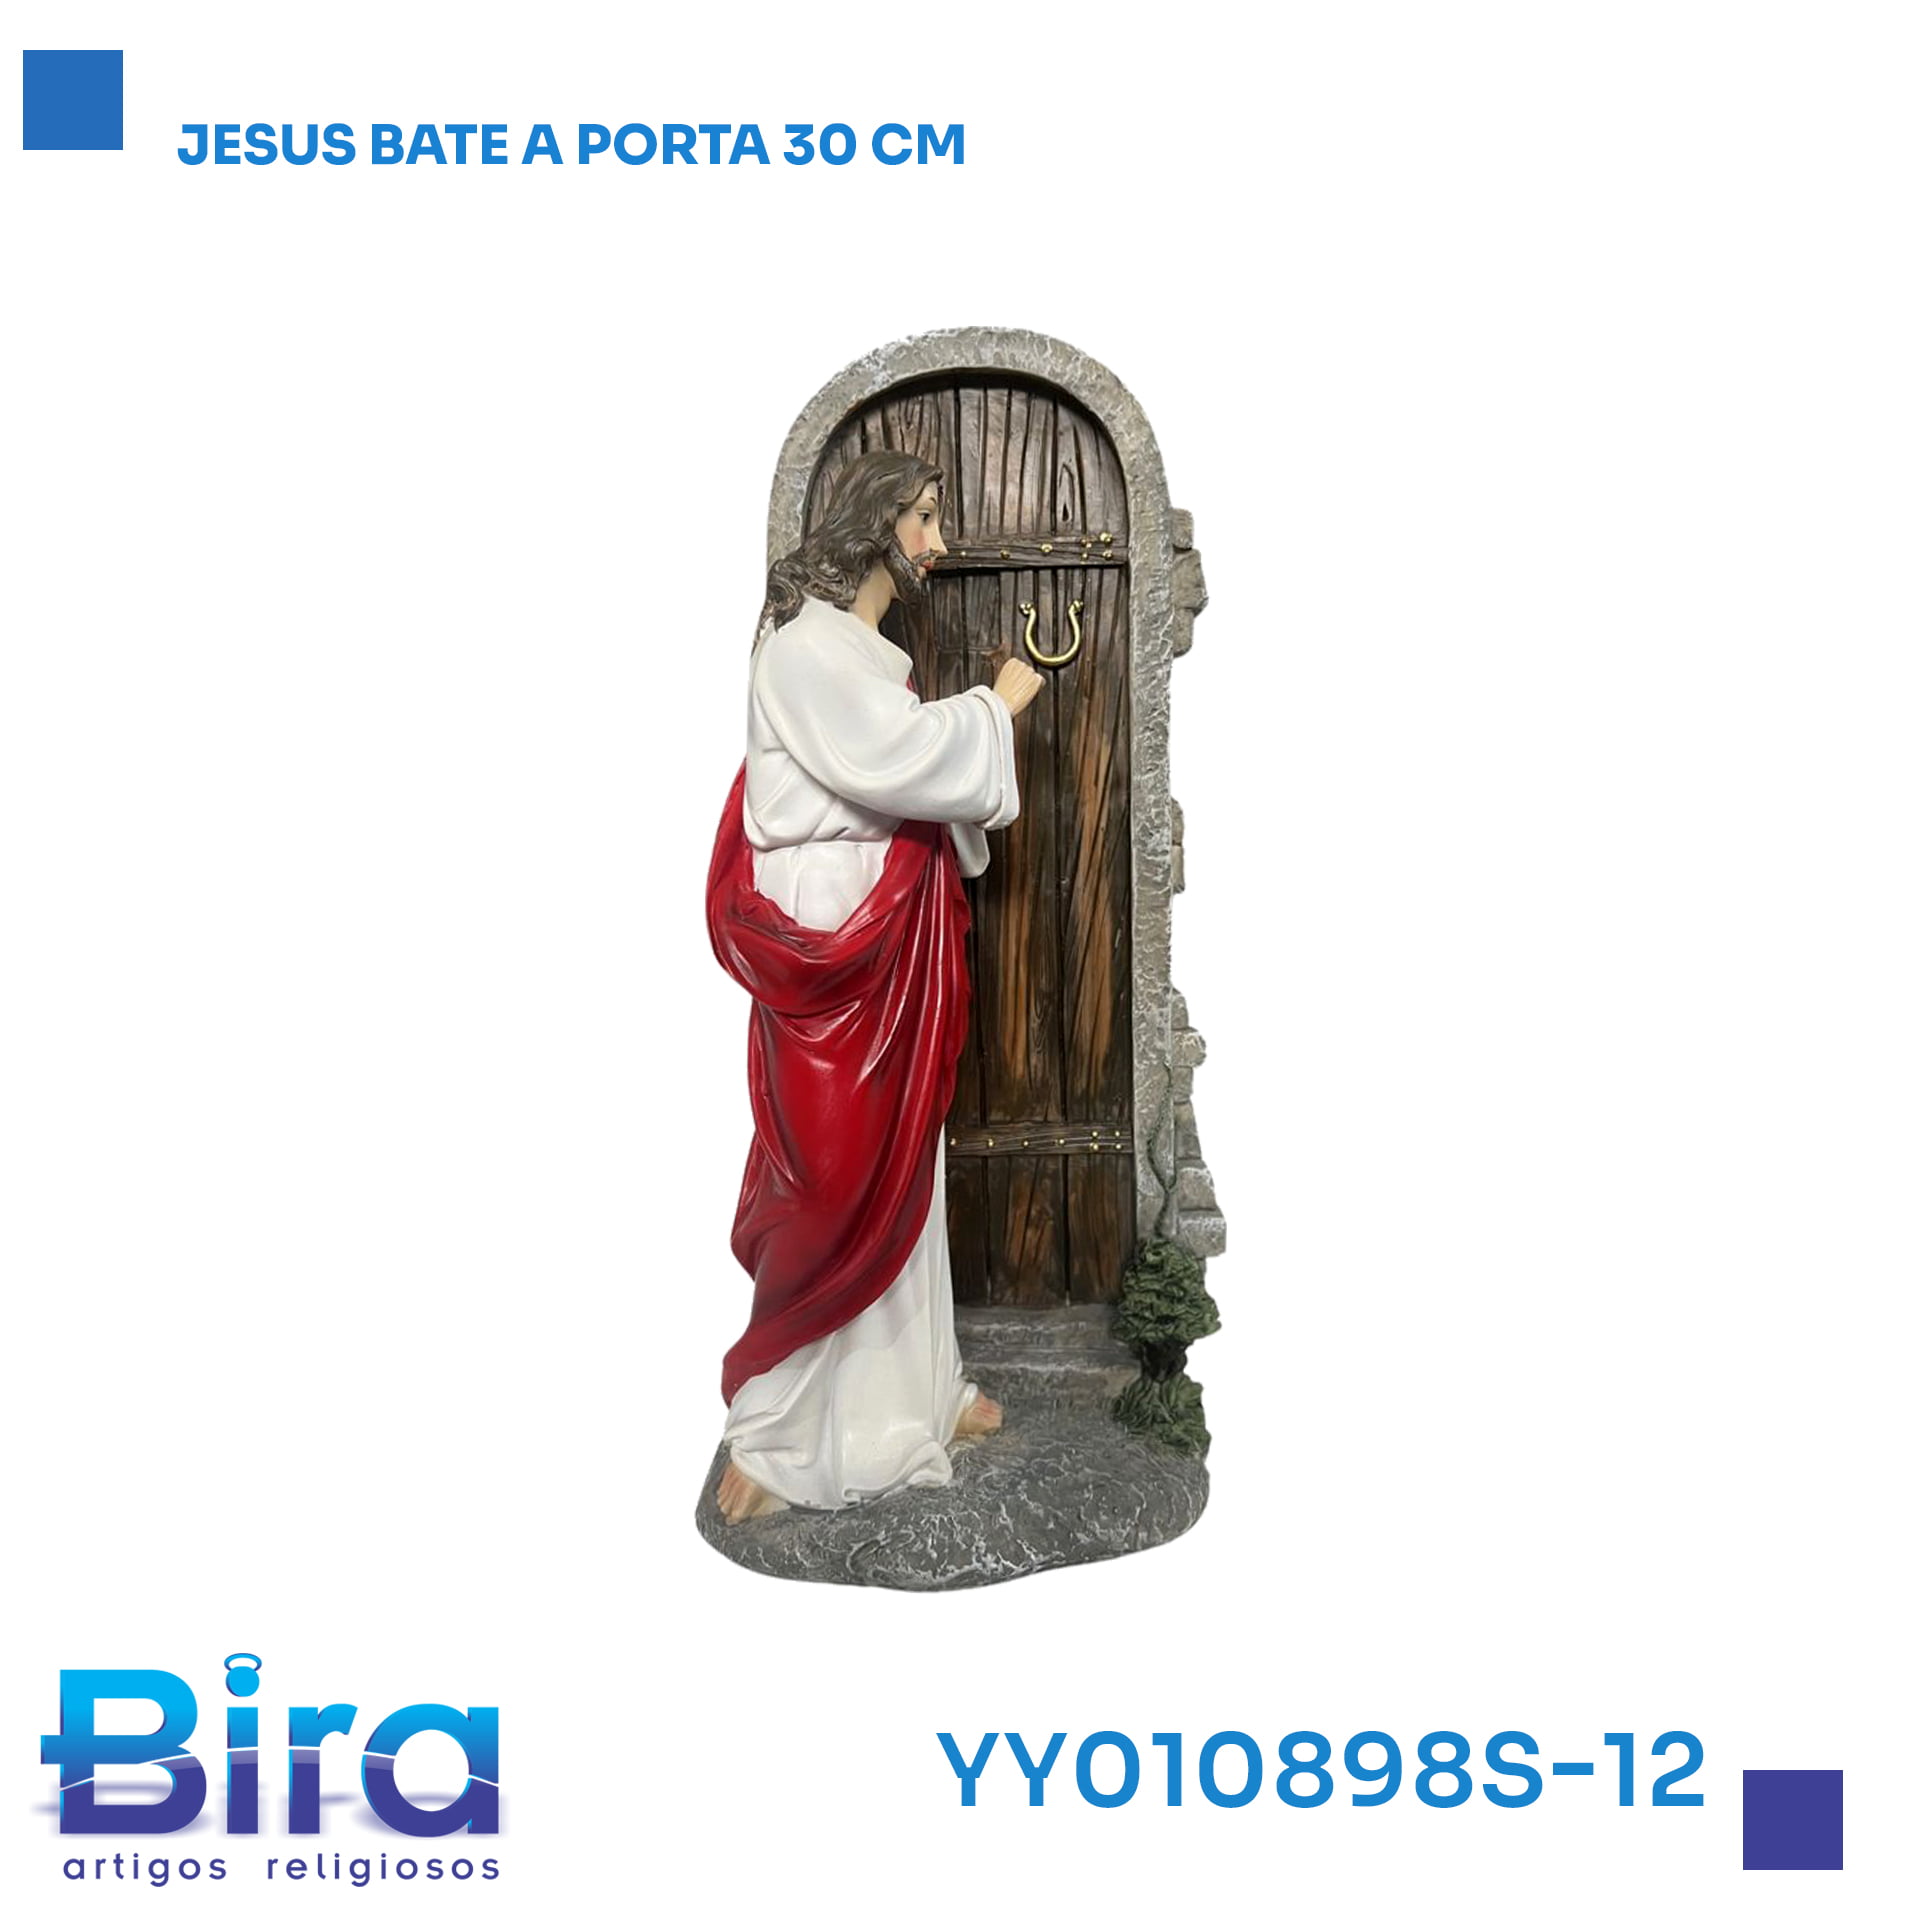 Bira Artigos Religiosos - JESUS BATE A PORTA 30CM  Cód.: YY010898S-12